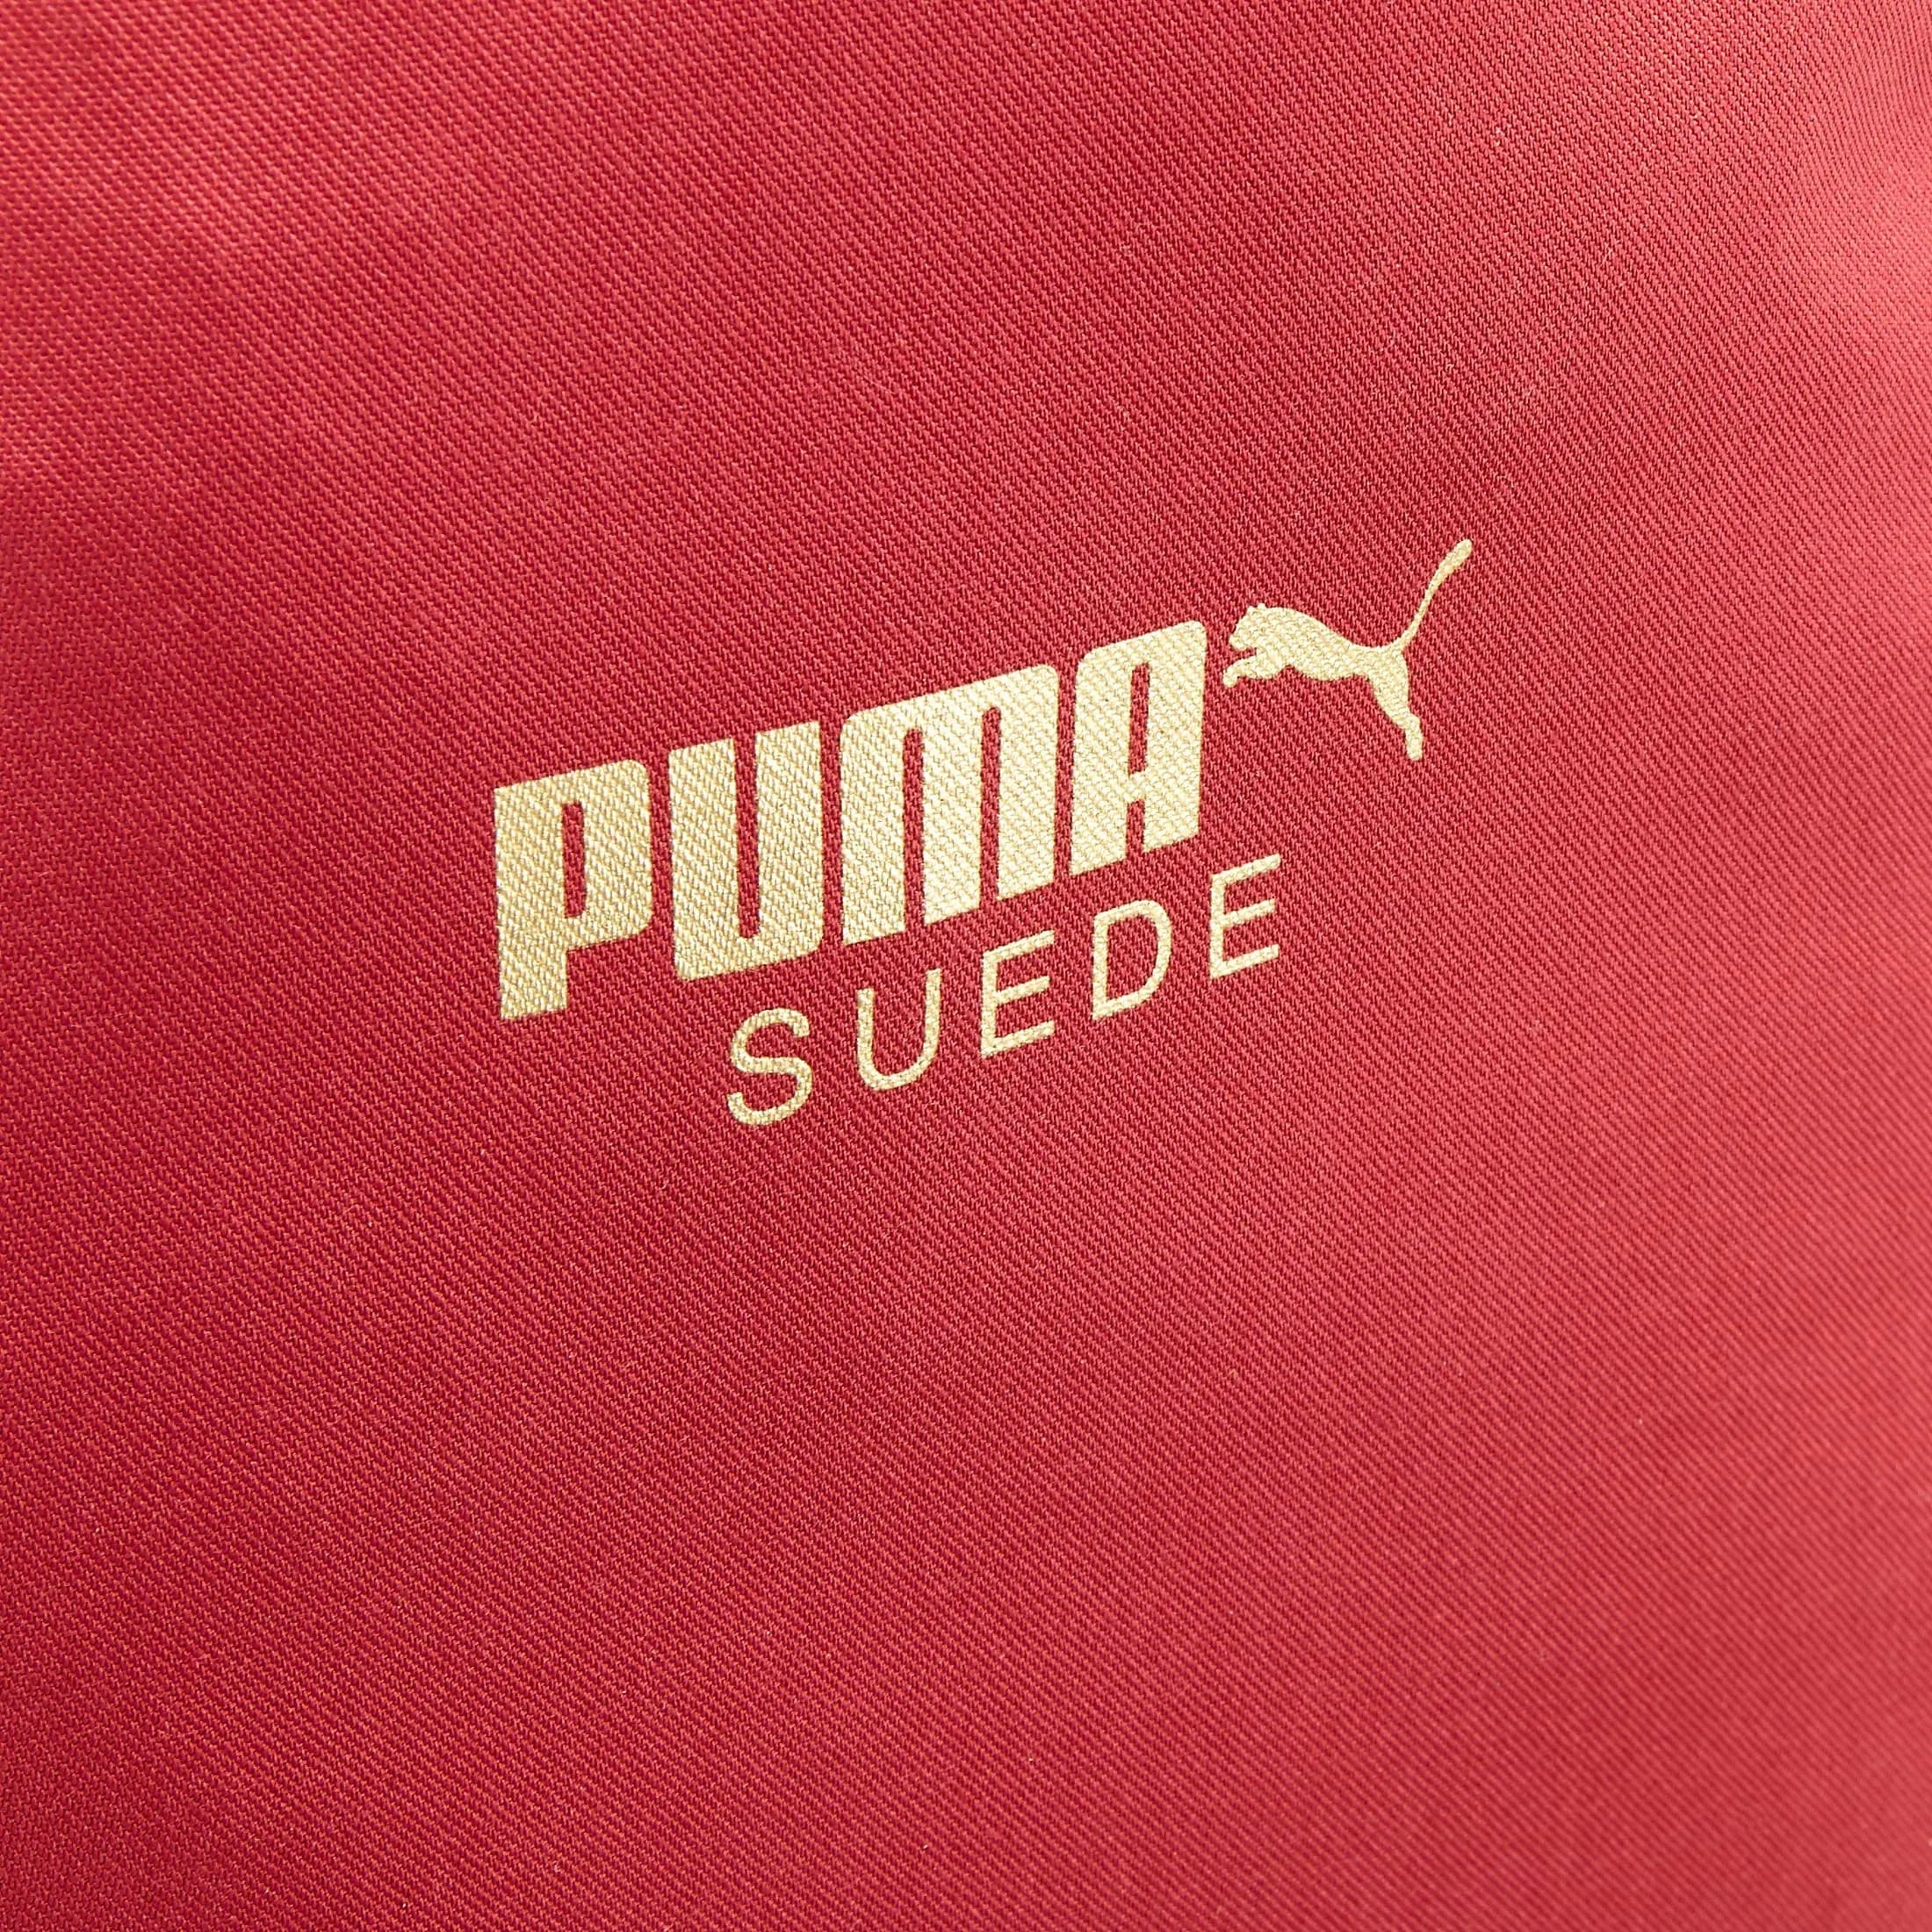 Puma Suede backpack 46 cm - black